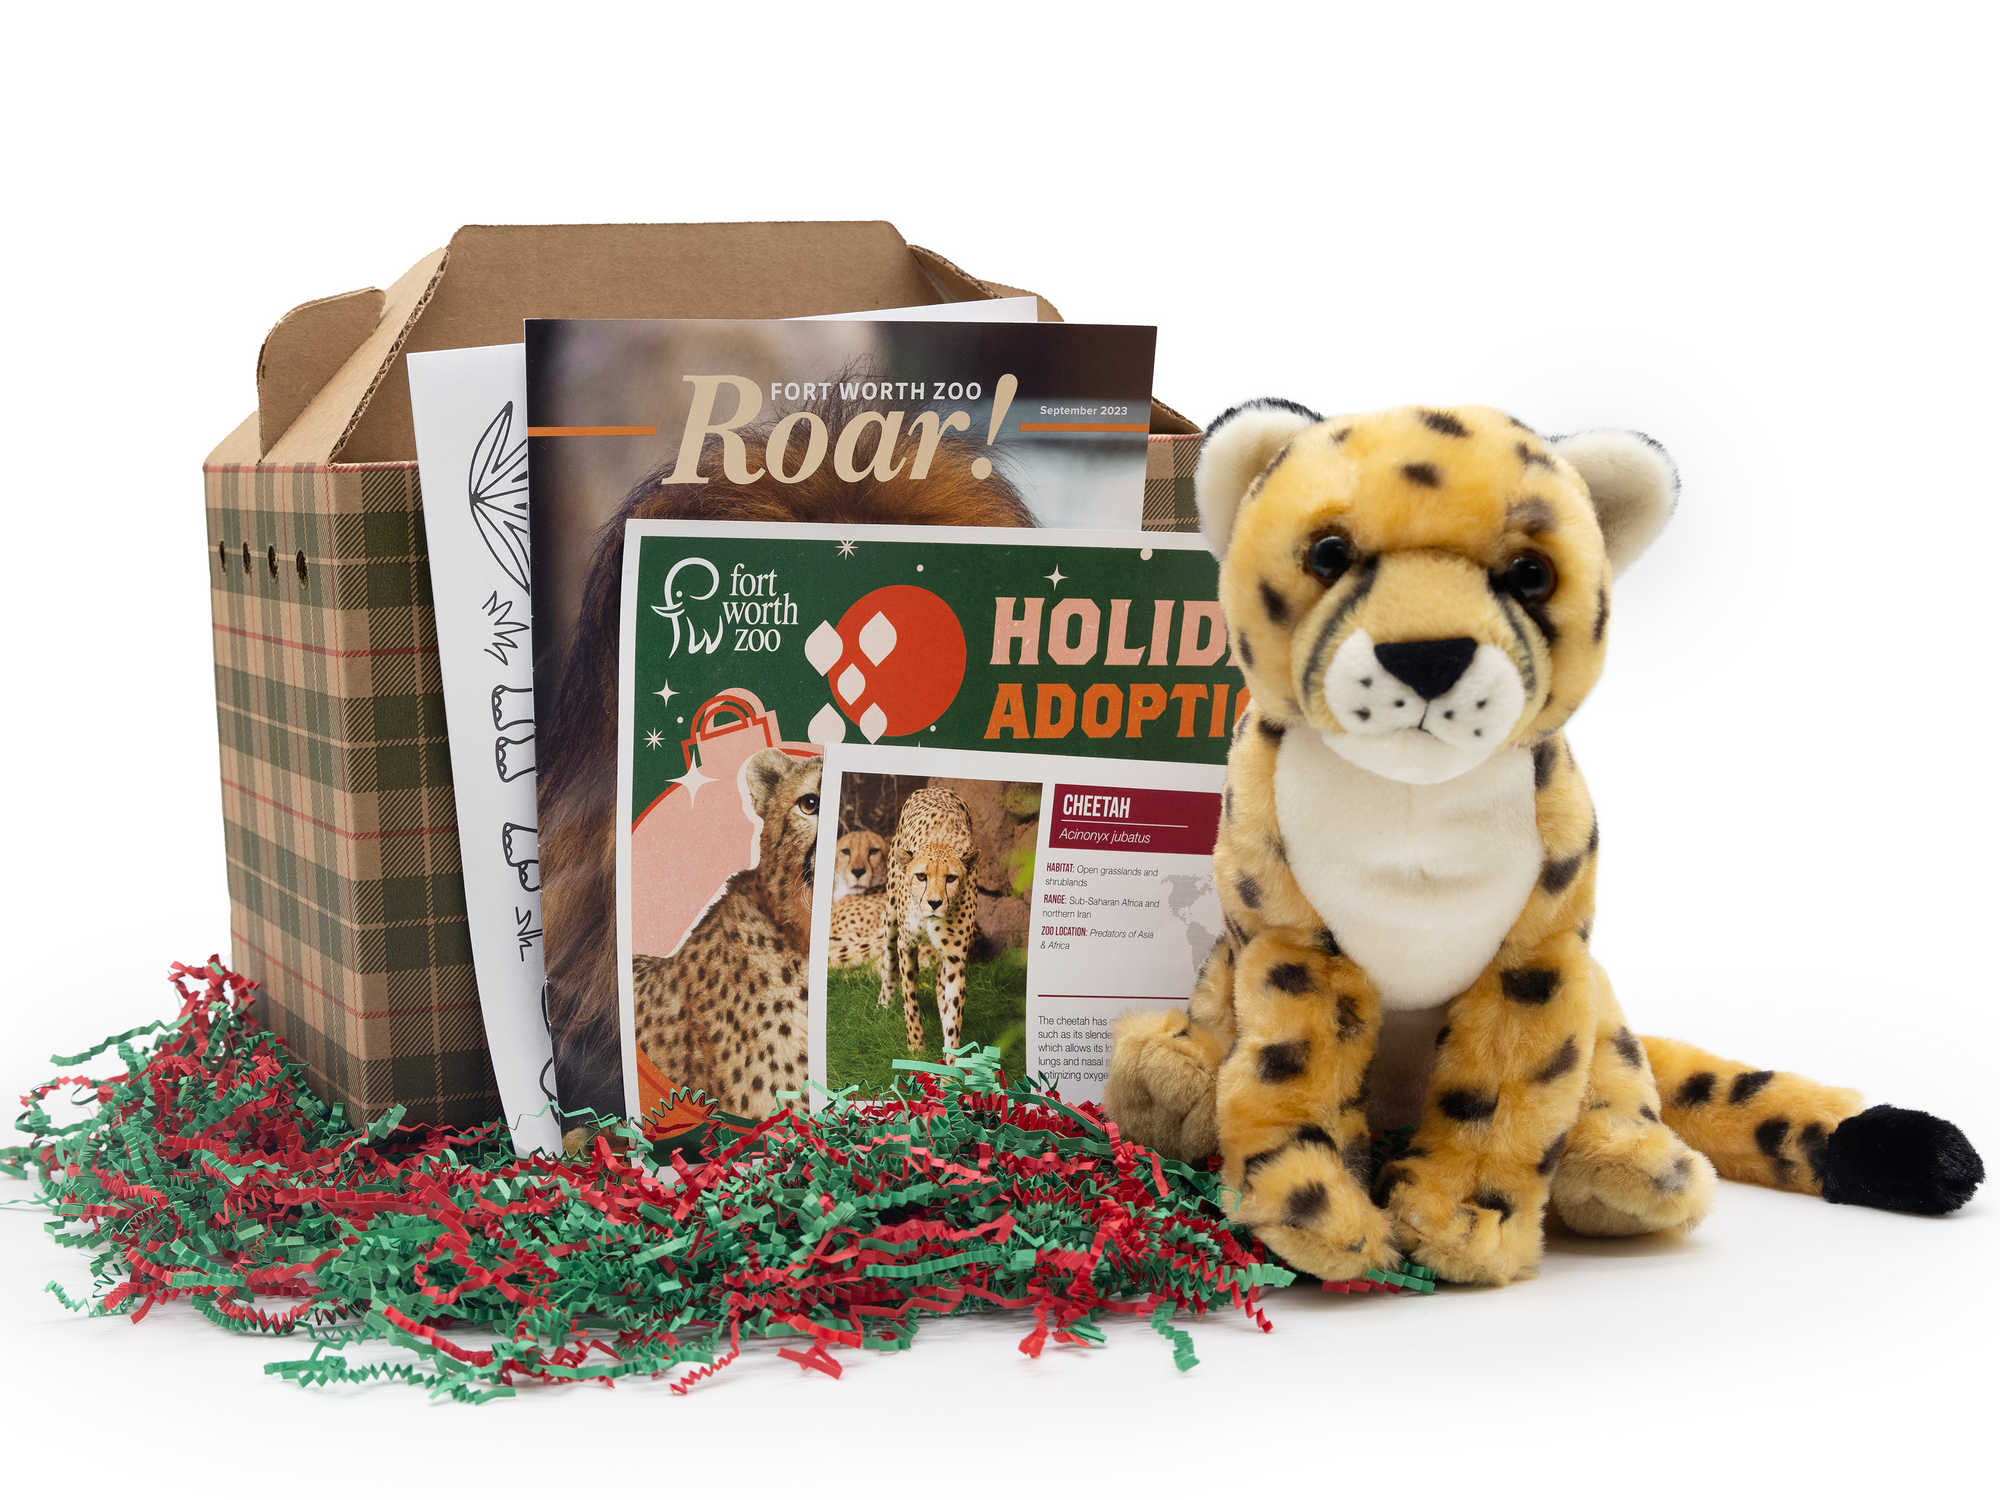 Fort Worth Zoo cheetah holiday adoption